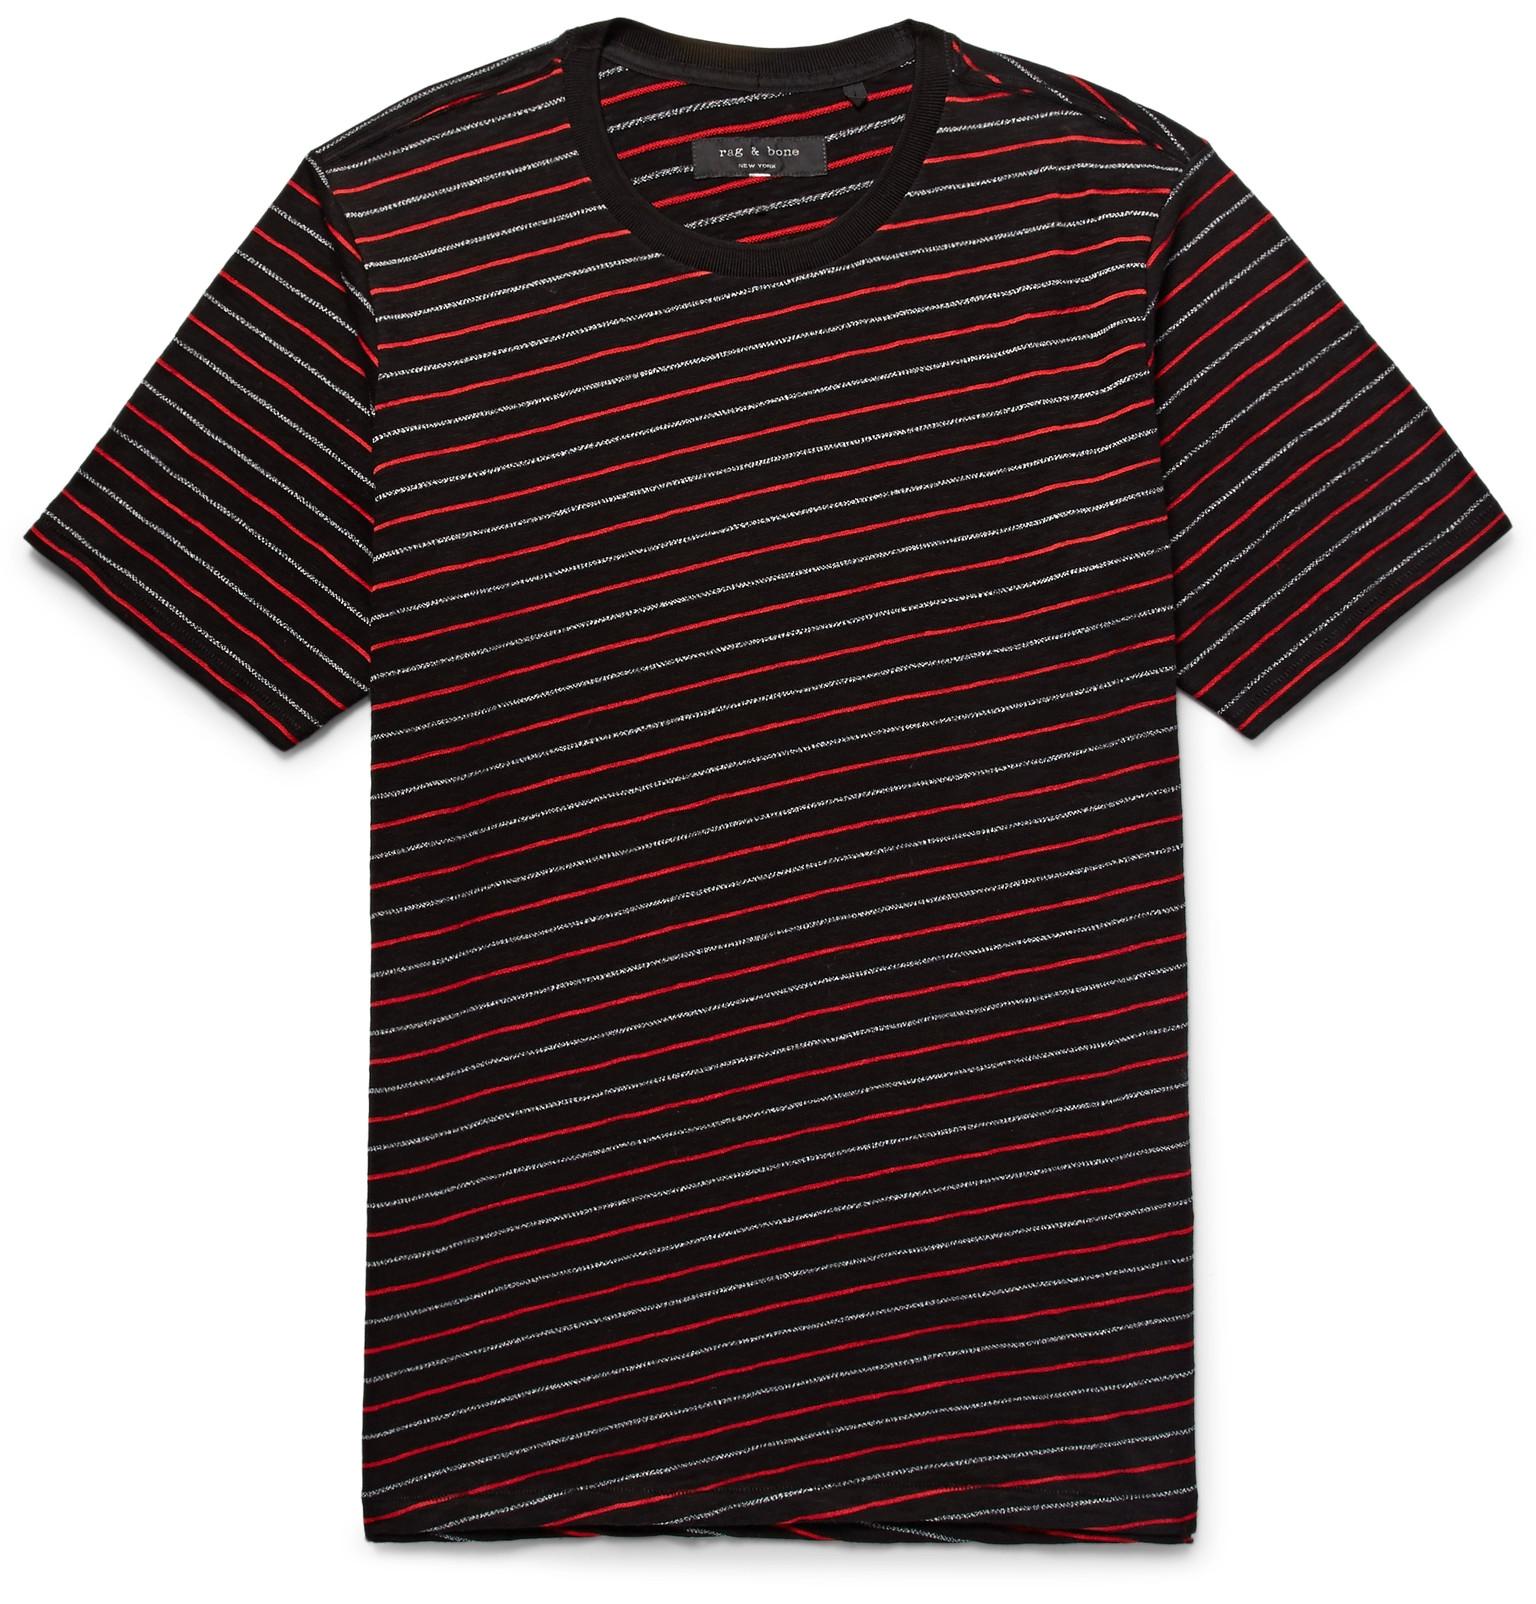 Lyst - Rag & Bone Colin Striped Cotton-blend Jacquard T-shirt in Black ...